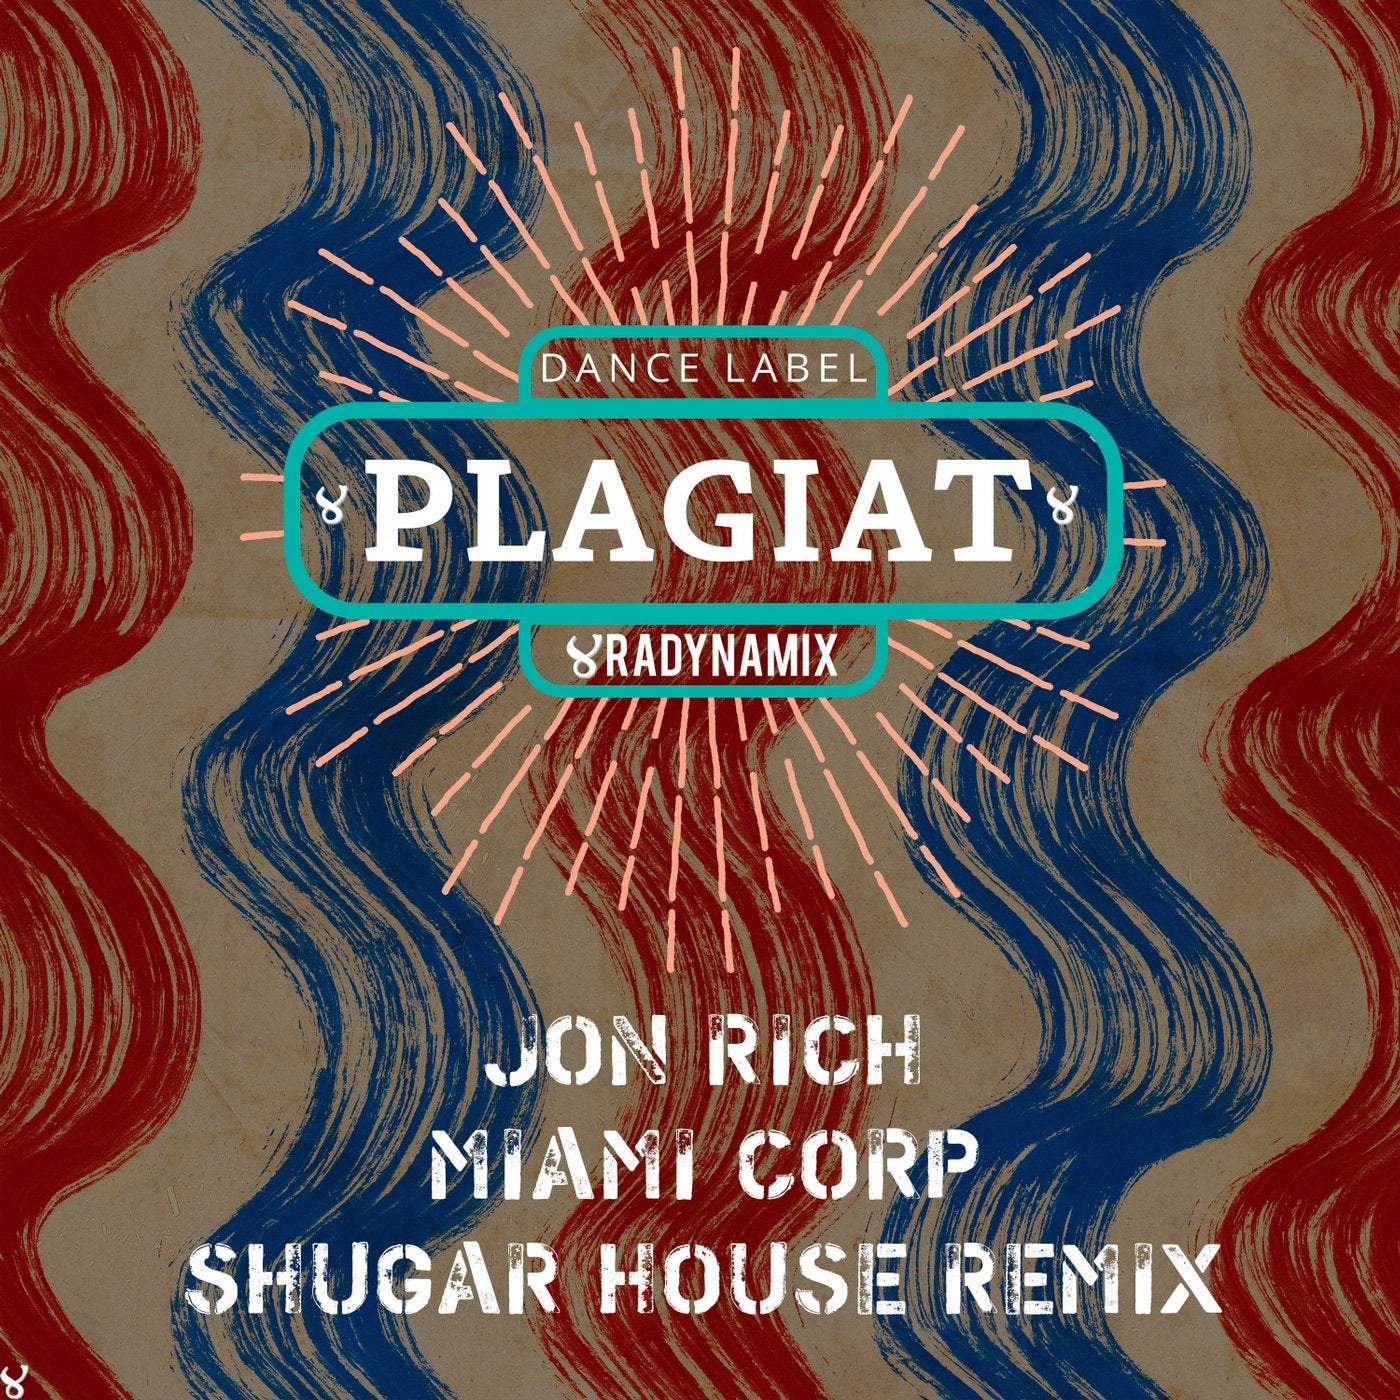 Miami Corp (Shugar House Remix)